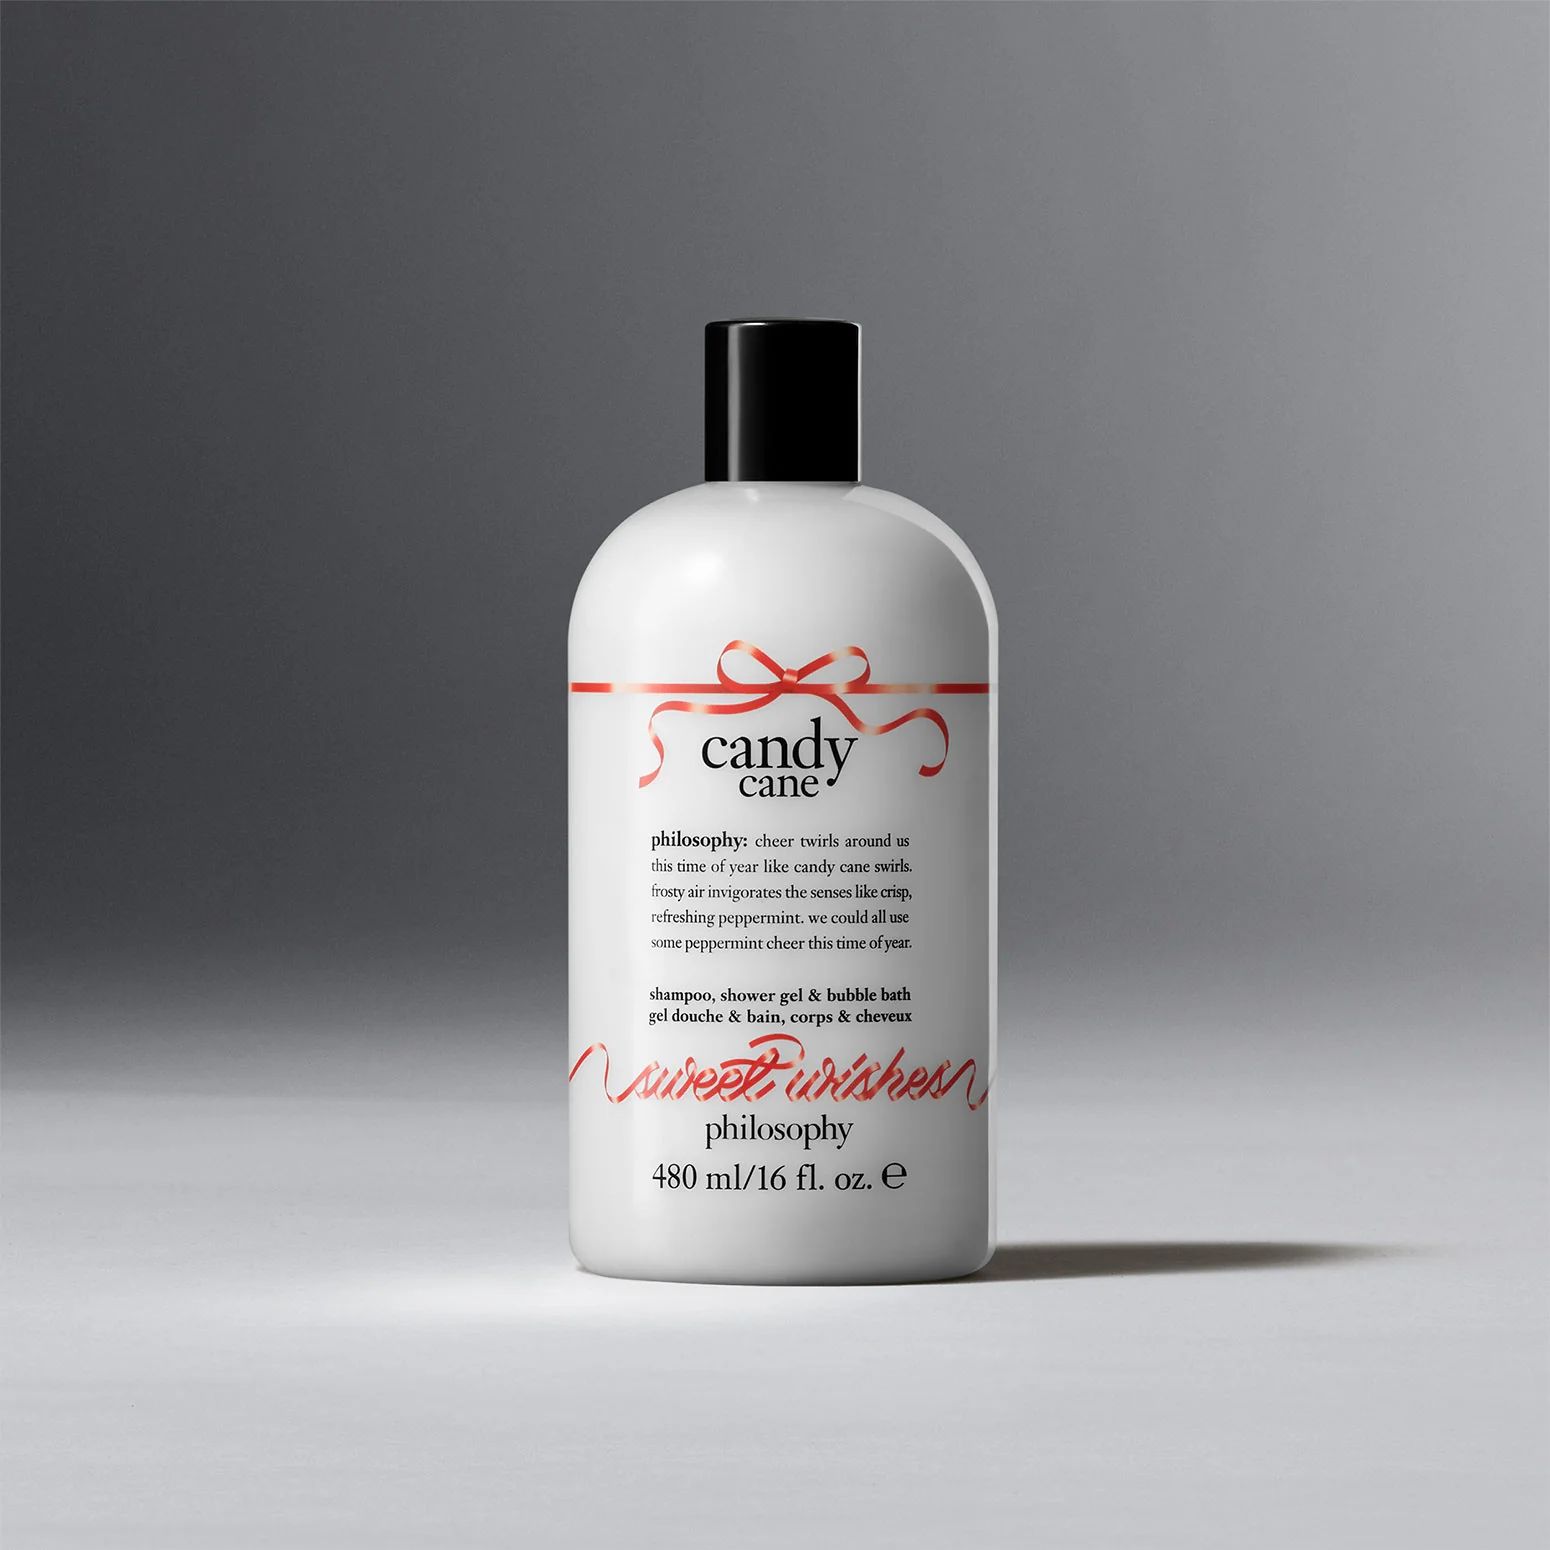 candy cane shampoo, shower gel & bubble bath | Philosophy